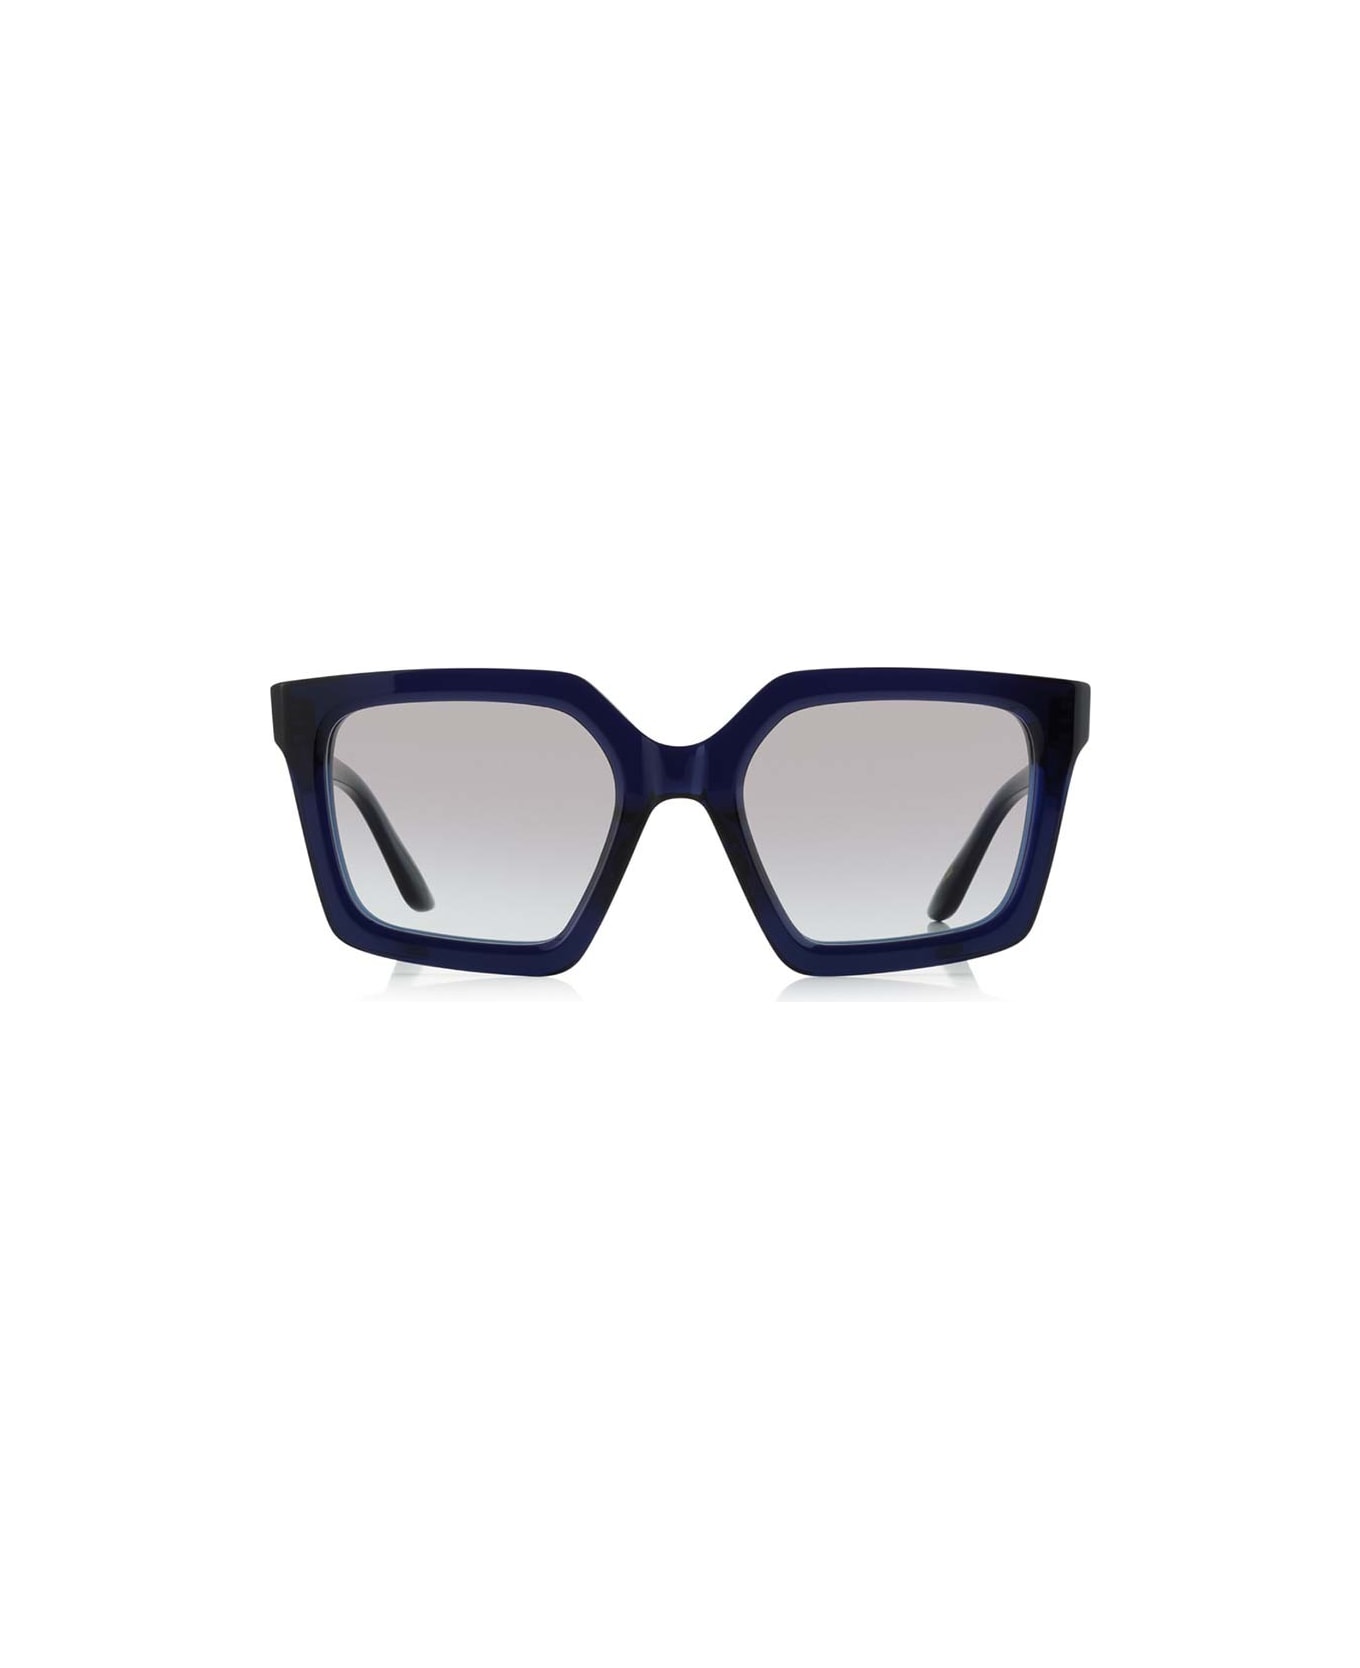 Robert La Roche Sunglasses - Blu/Blu